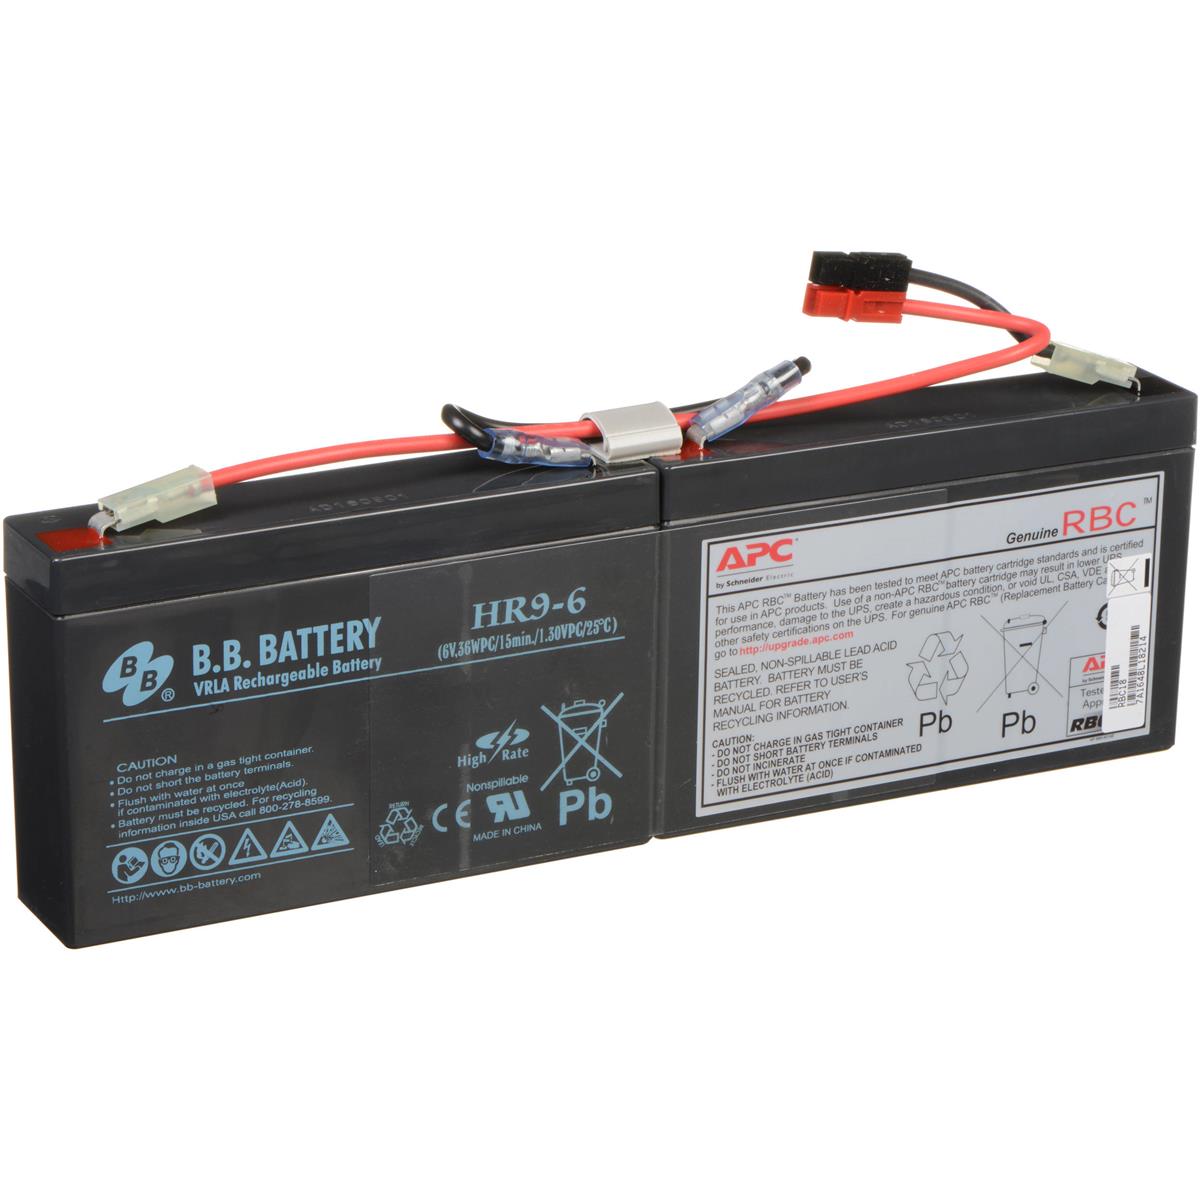 

American Power Conversion (APC) APC #18 Replacement Battery Cartridge